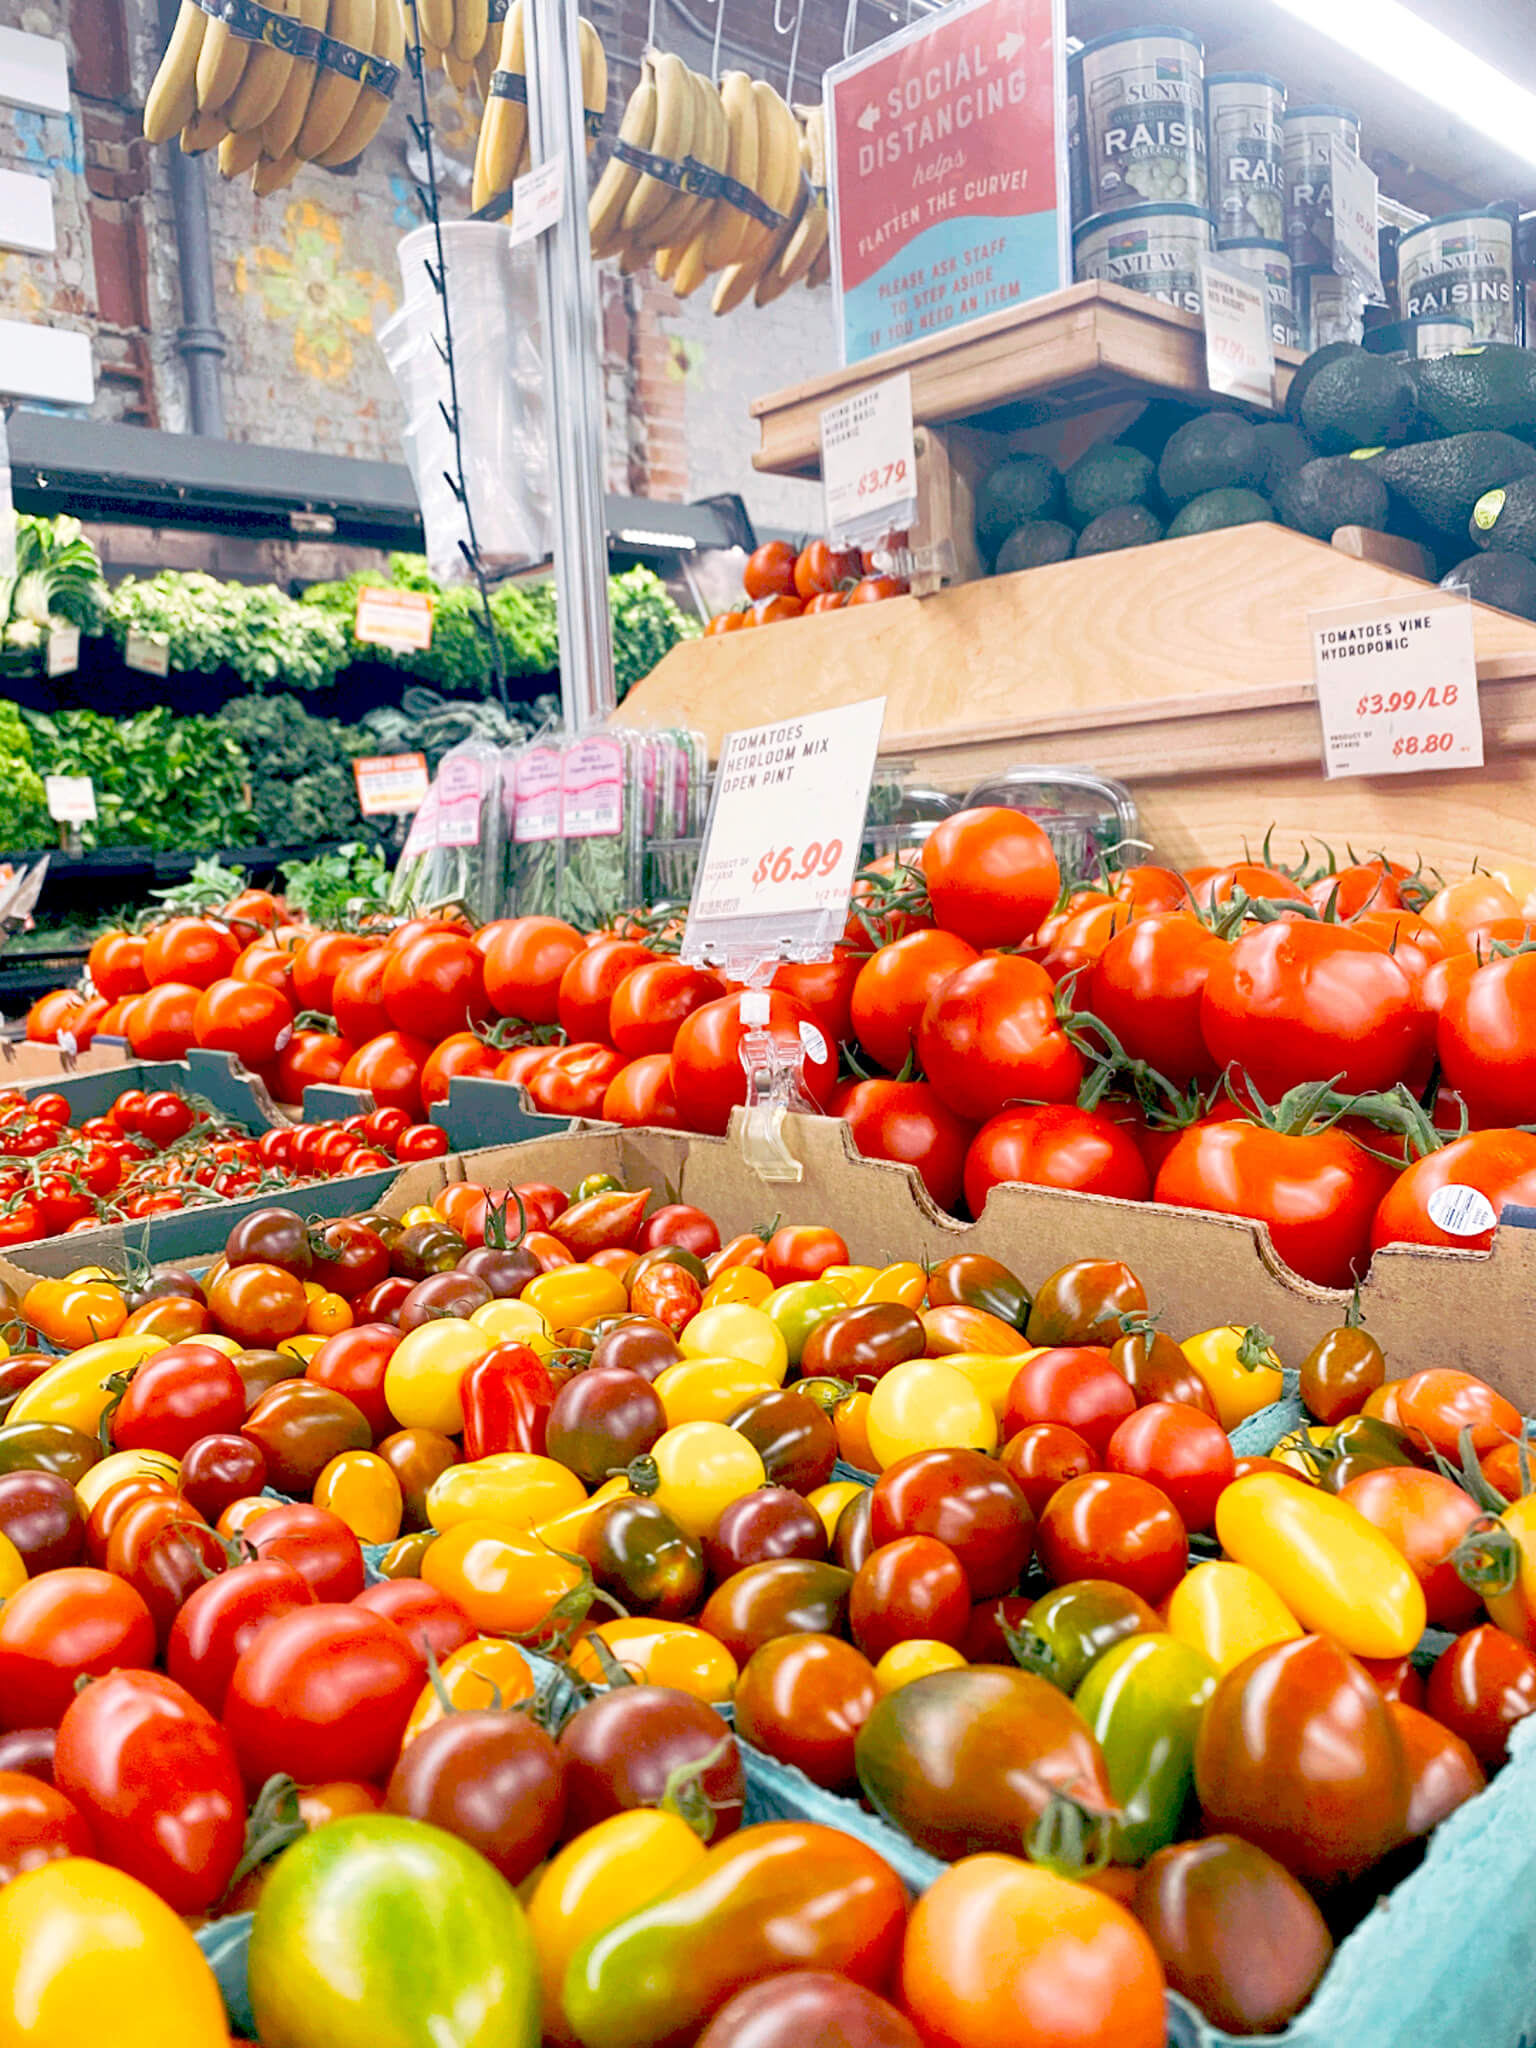 https://thesweetpotato.ca/wp-content/uploads/2020/09/store-dept-produce-tomatoes.jpg